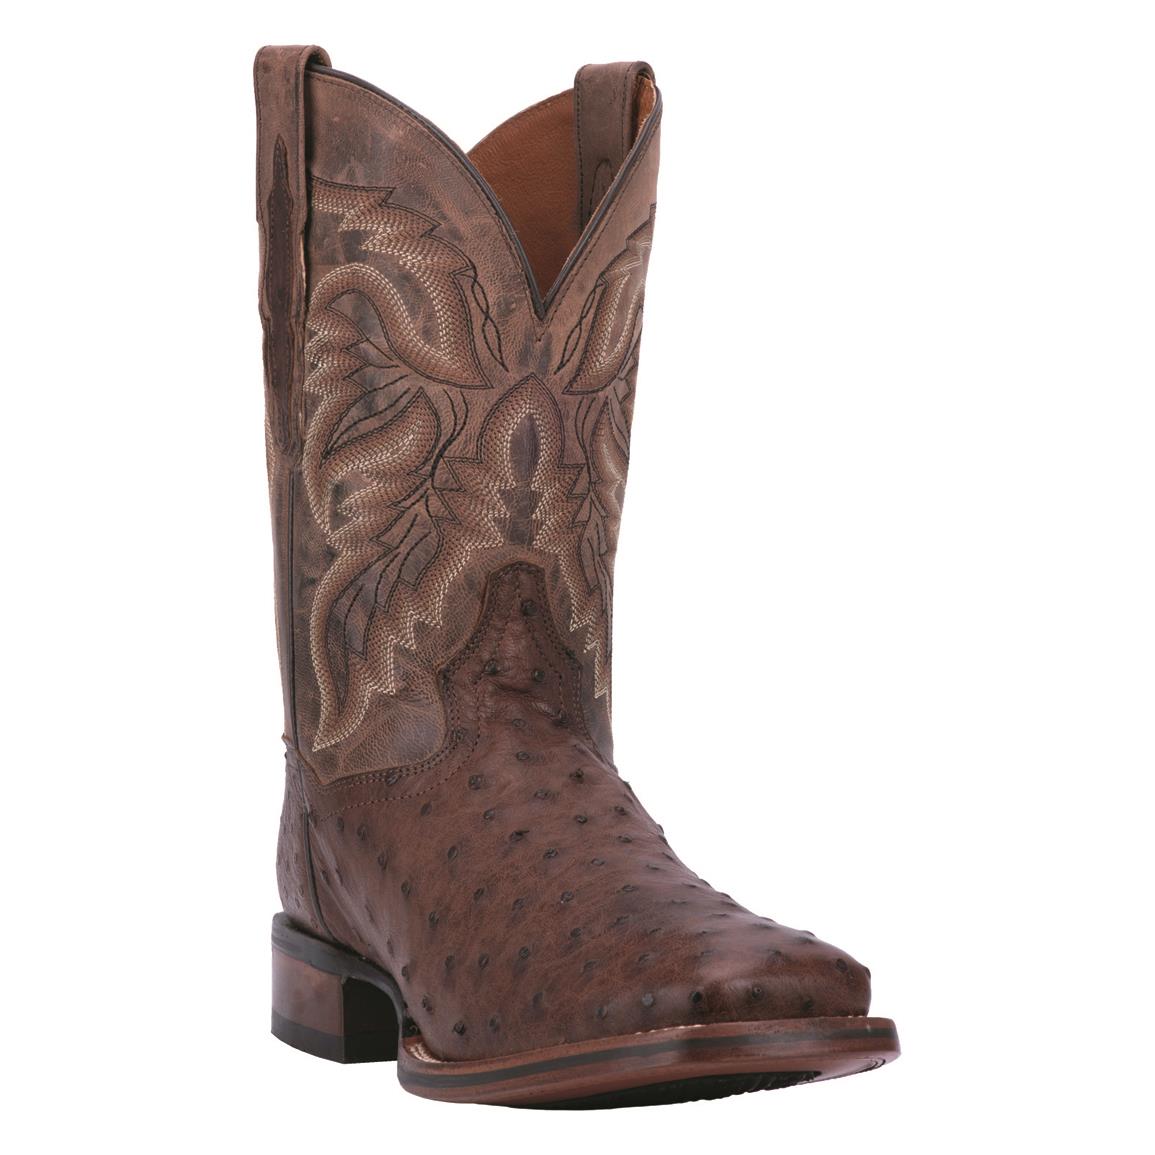 Dan Post Men's Alamosa Full Quill Ostrich Western Boots, Chocolate